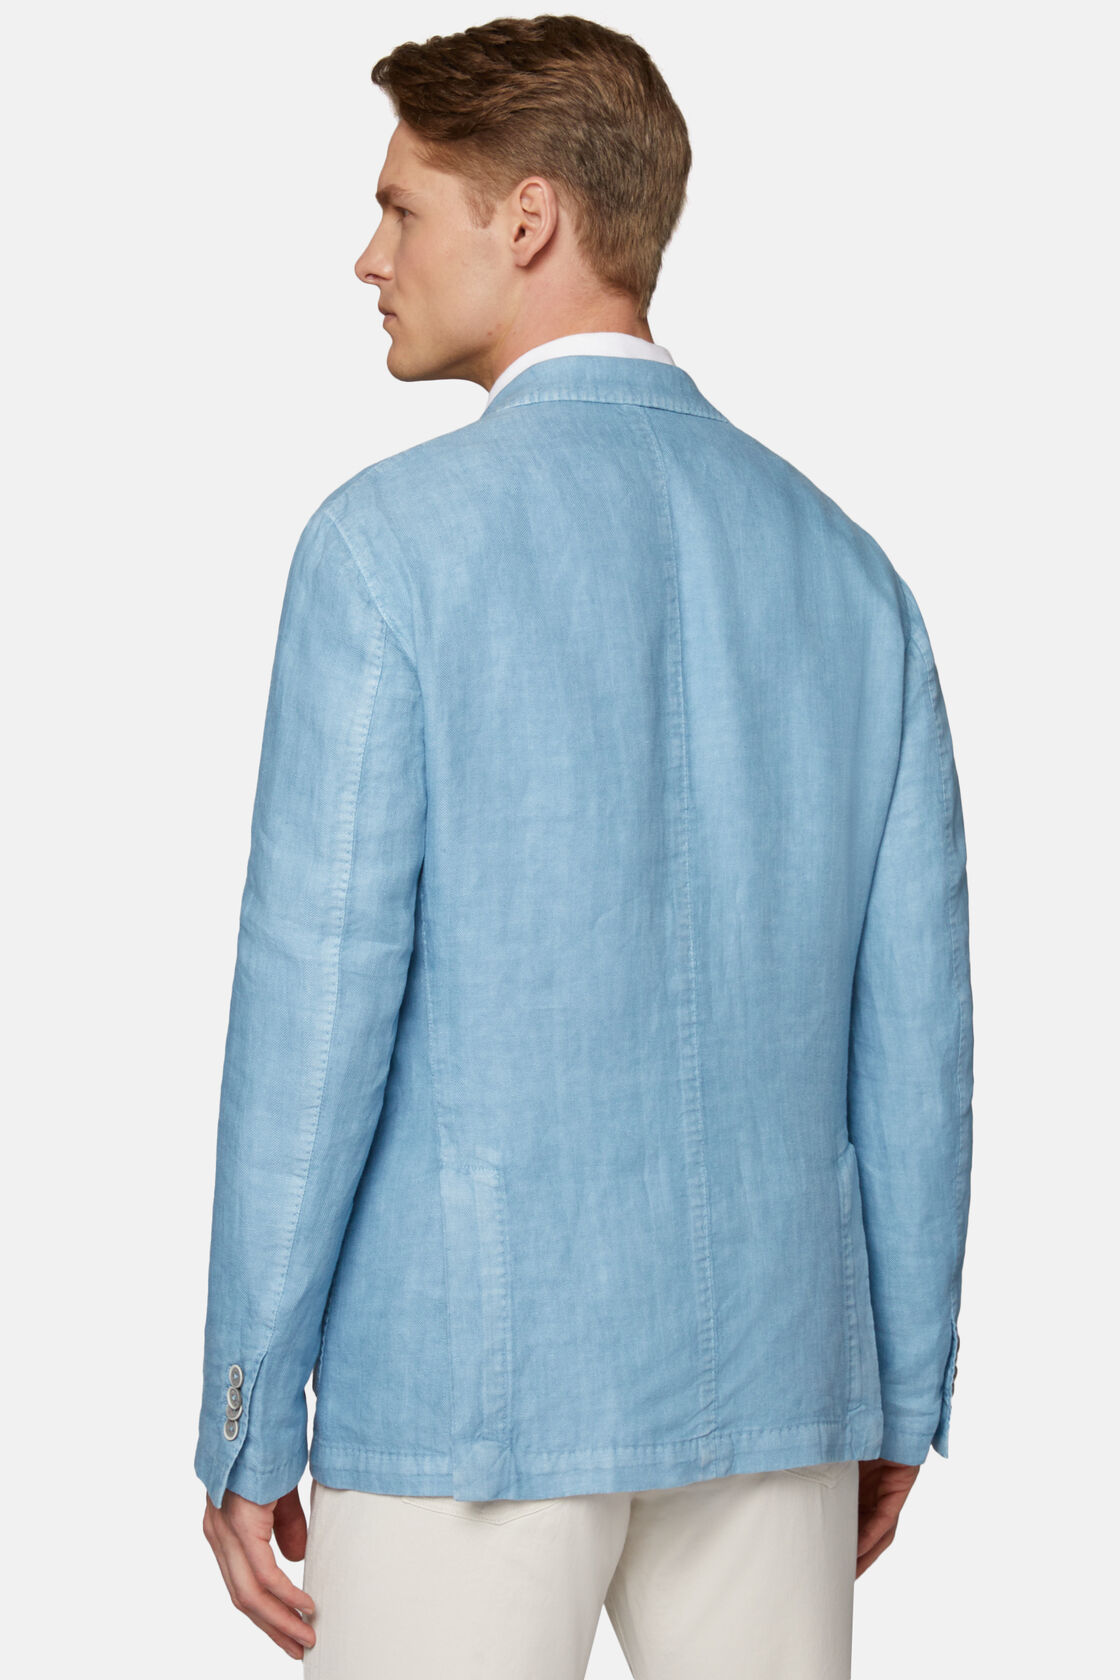 Sky Blue Herringbone Linen Jacket, Light Blu, hi-res